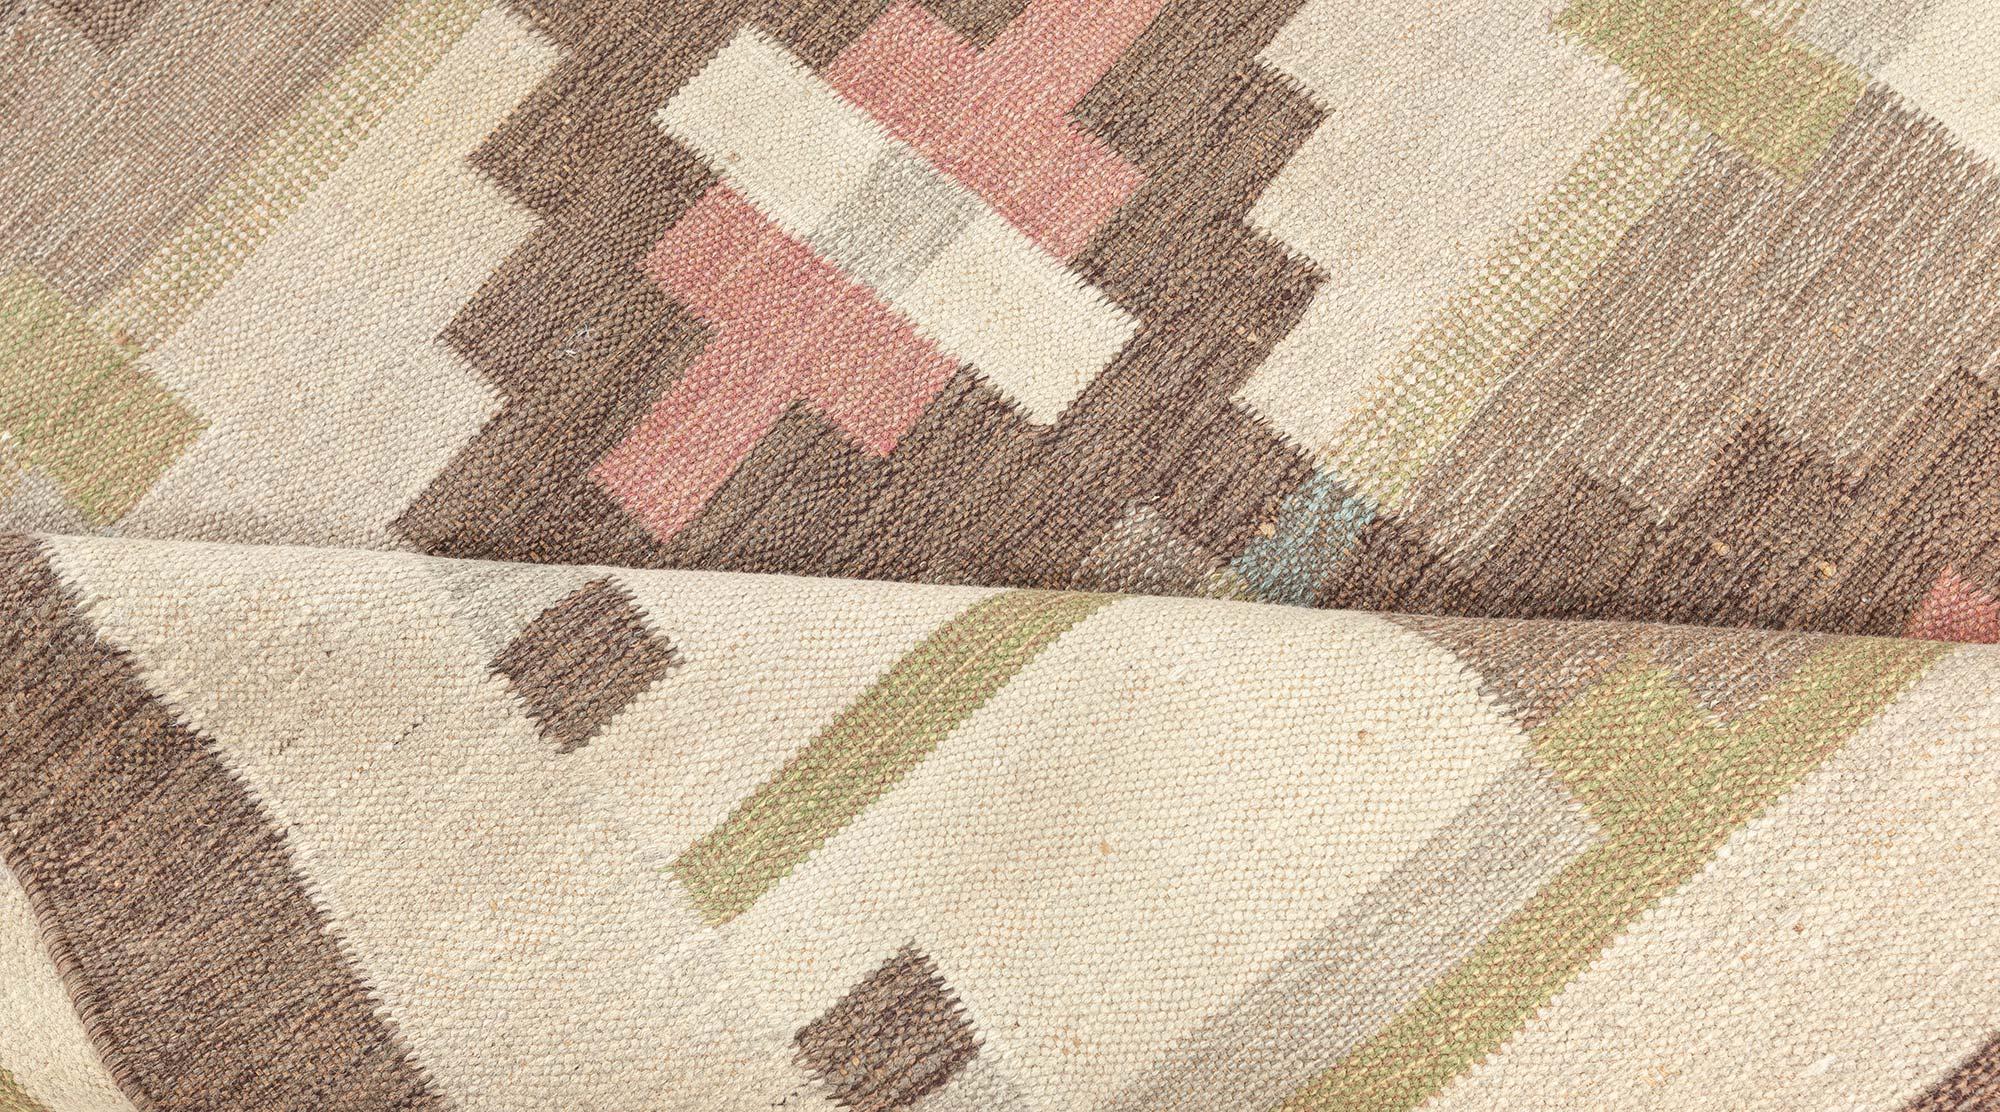 Vintage Swedish flat woven rug by Sverker Greuholm at Doris Leslie Blau
Size: 5'8